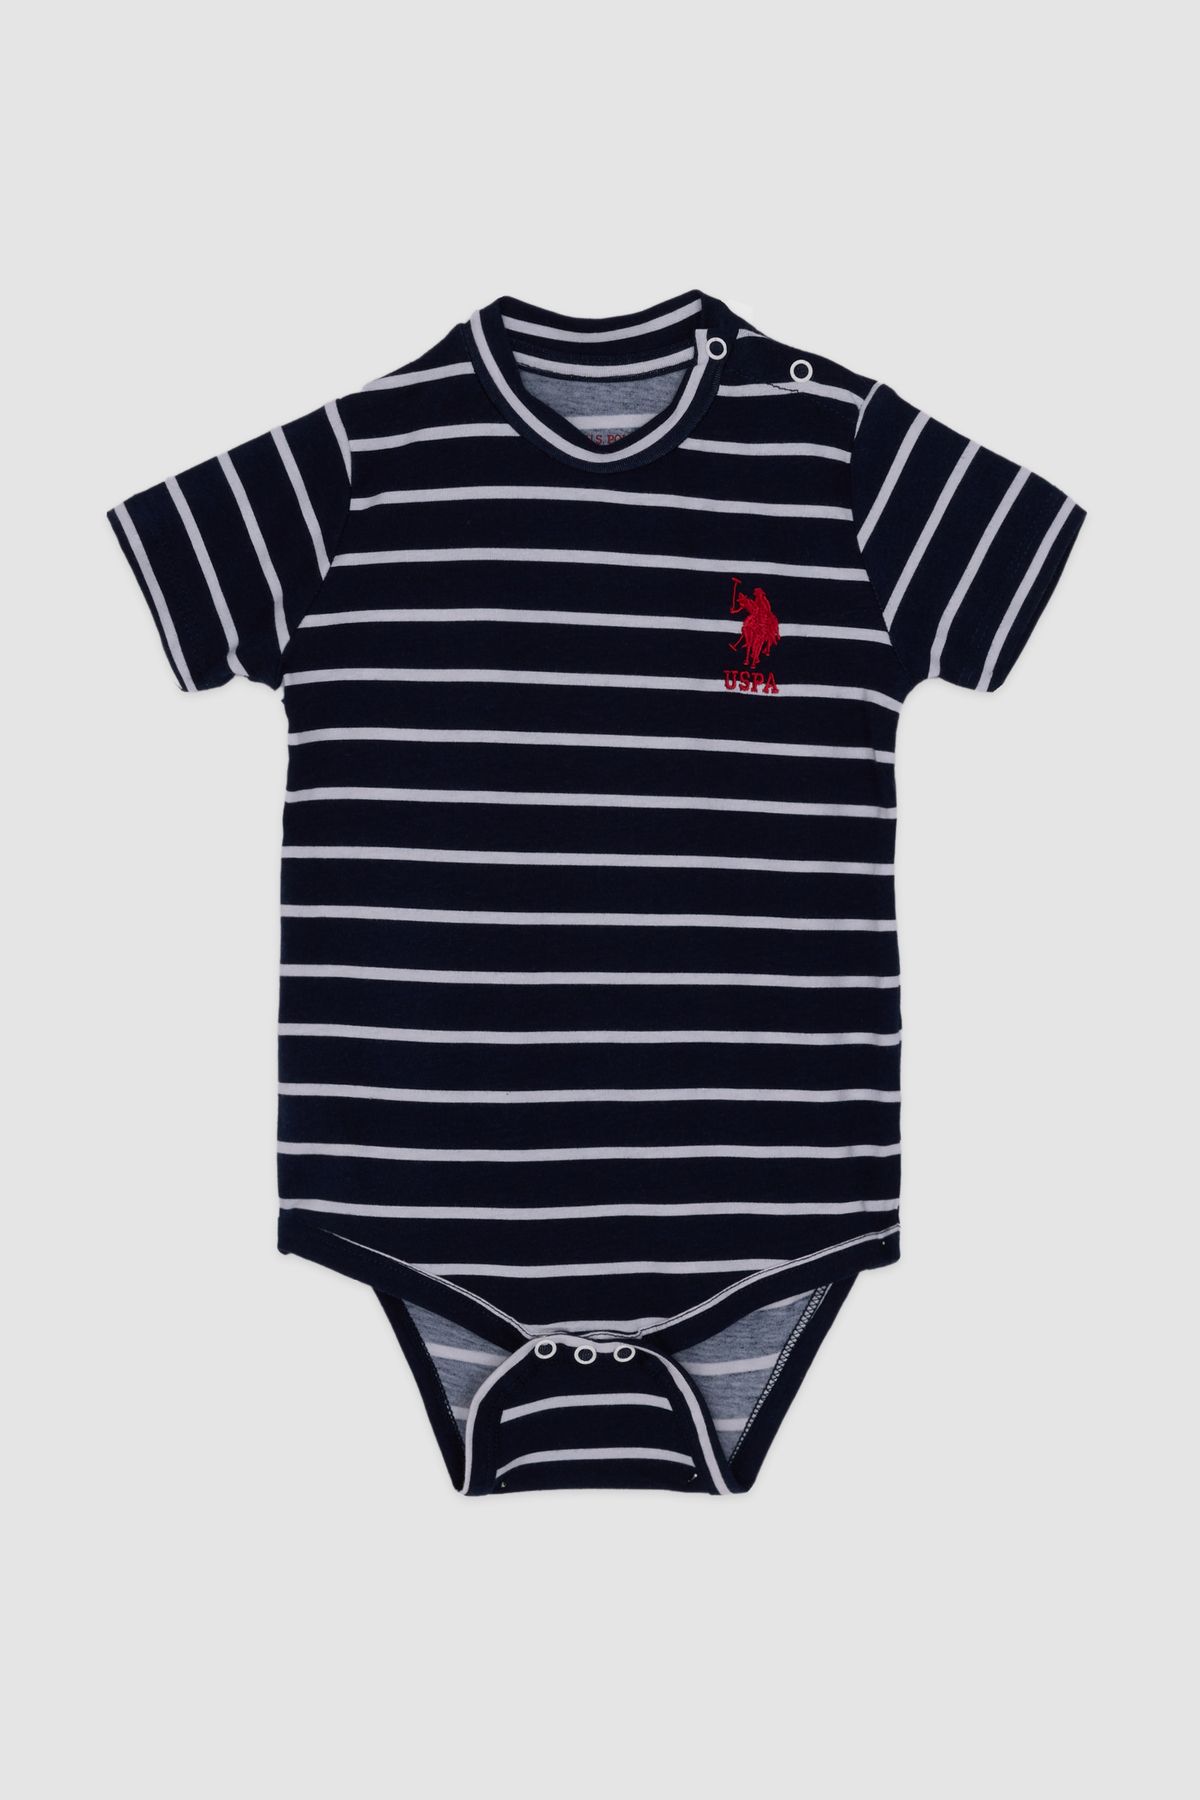 U.S. Polo Assn. U.S. Polo Assn Lisanslı Striped Overalls Lacivert Erkek Bebek Takımı